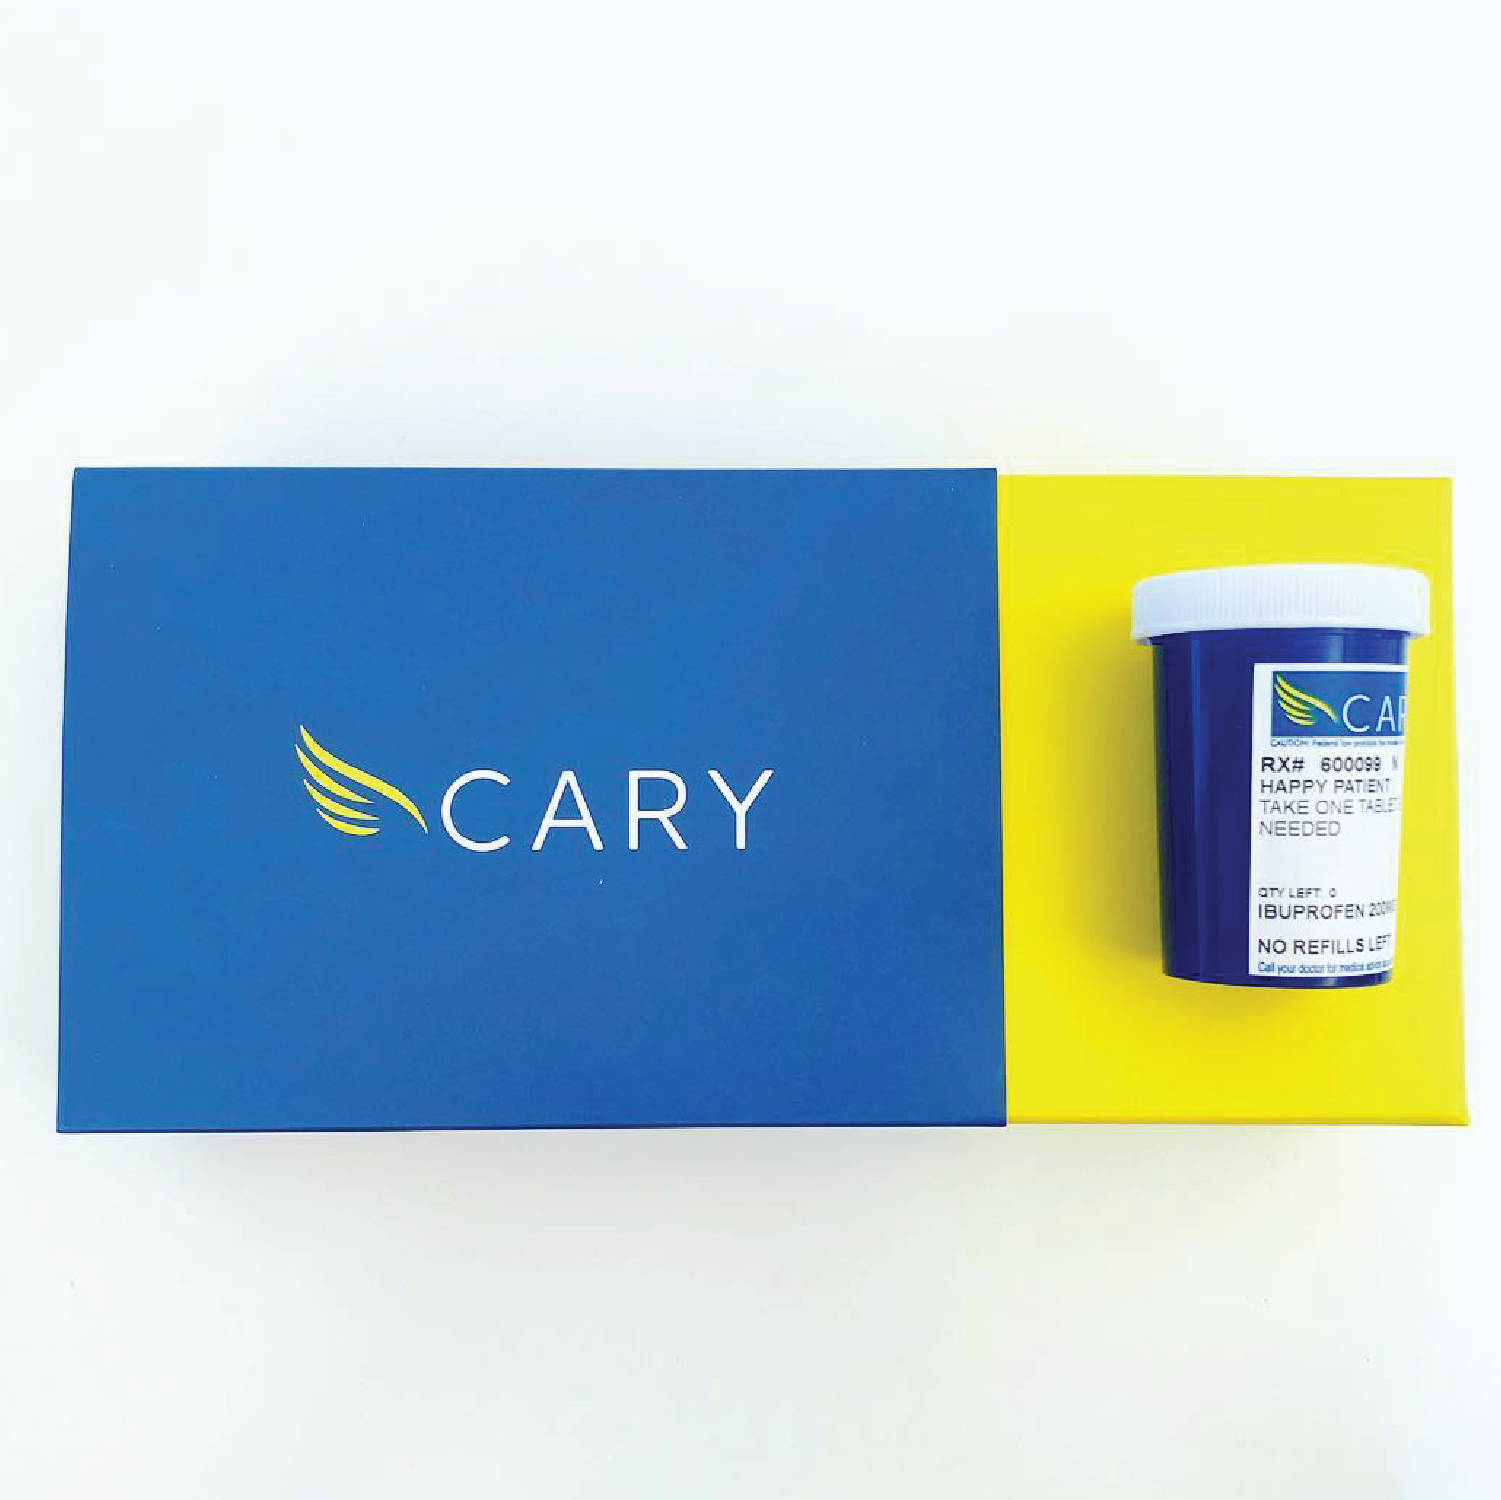 CaryRx - On-Demand Pharmacy